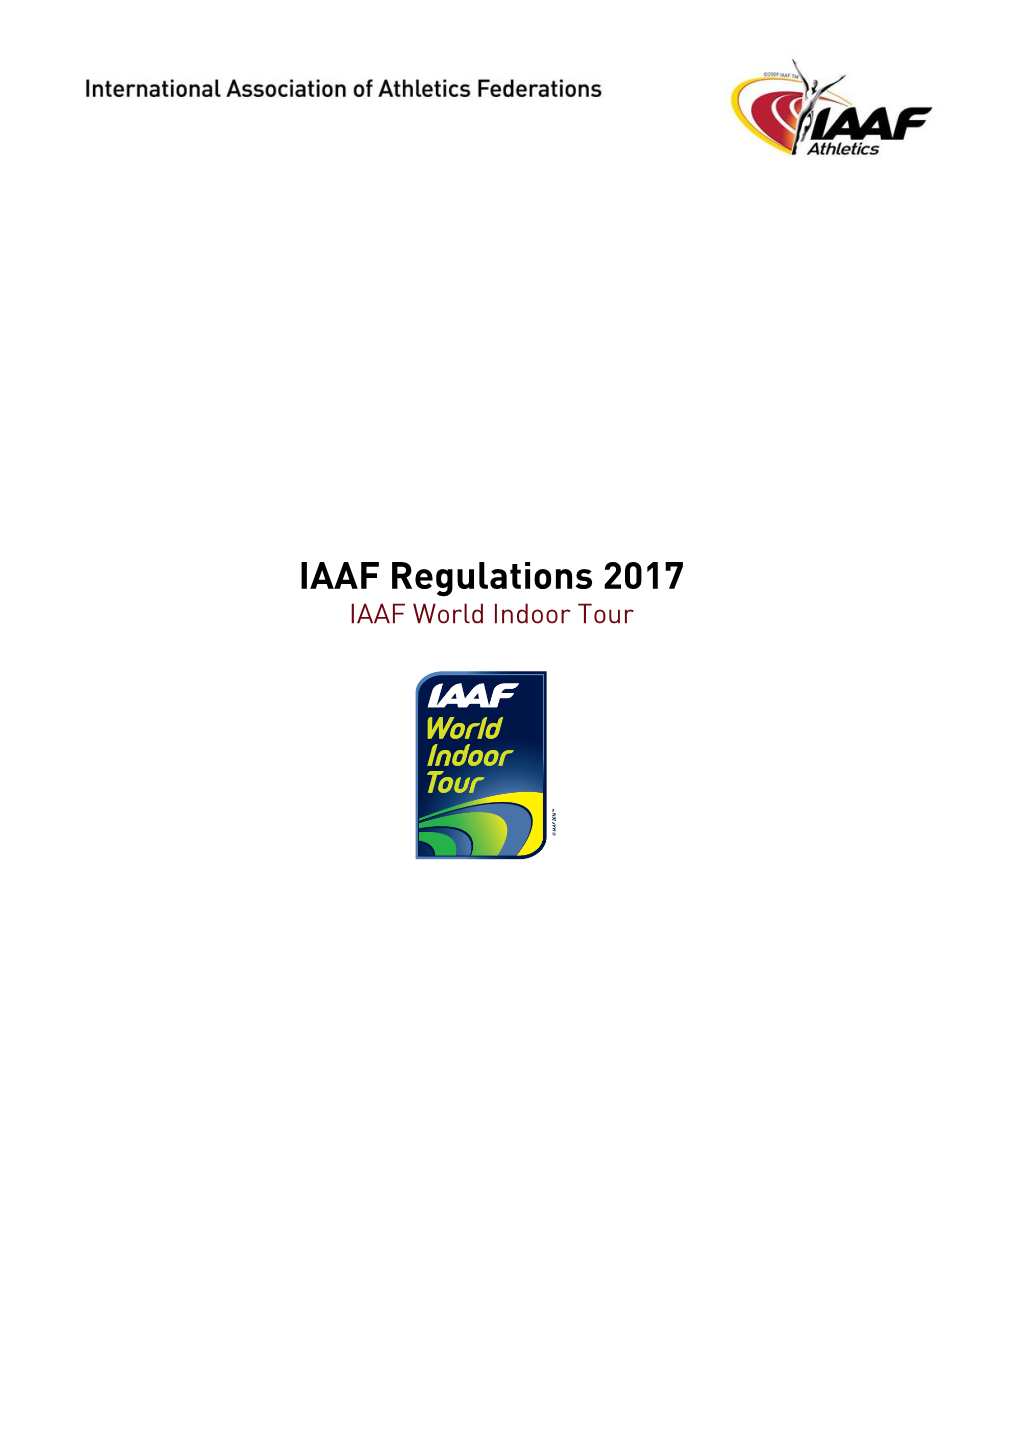 IAAF WIT Regulations